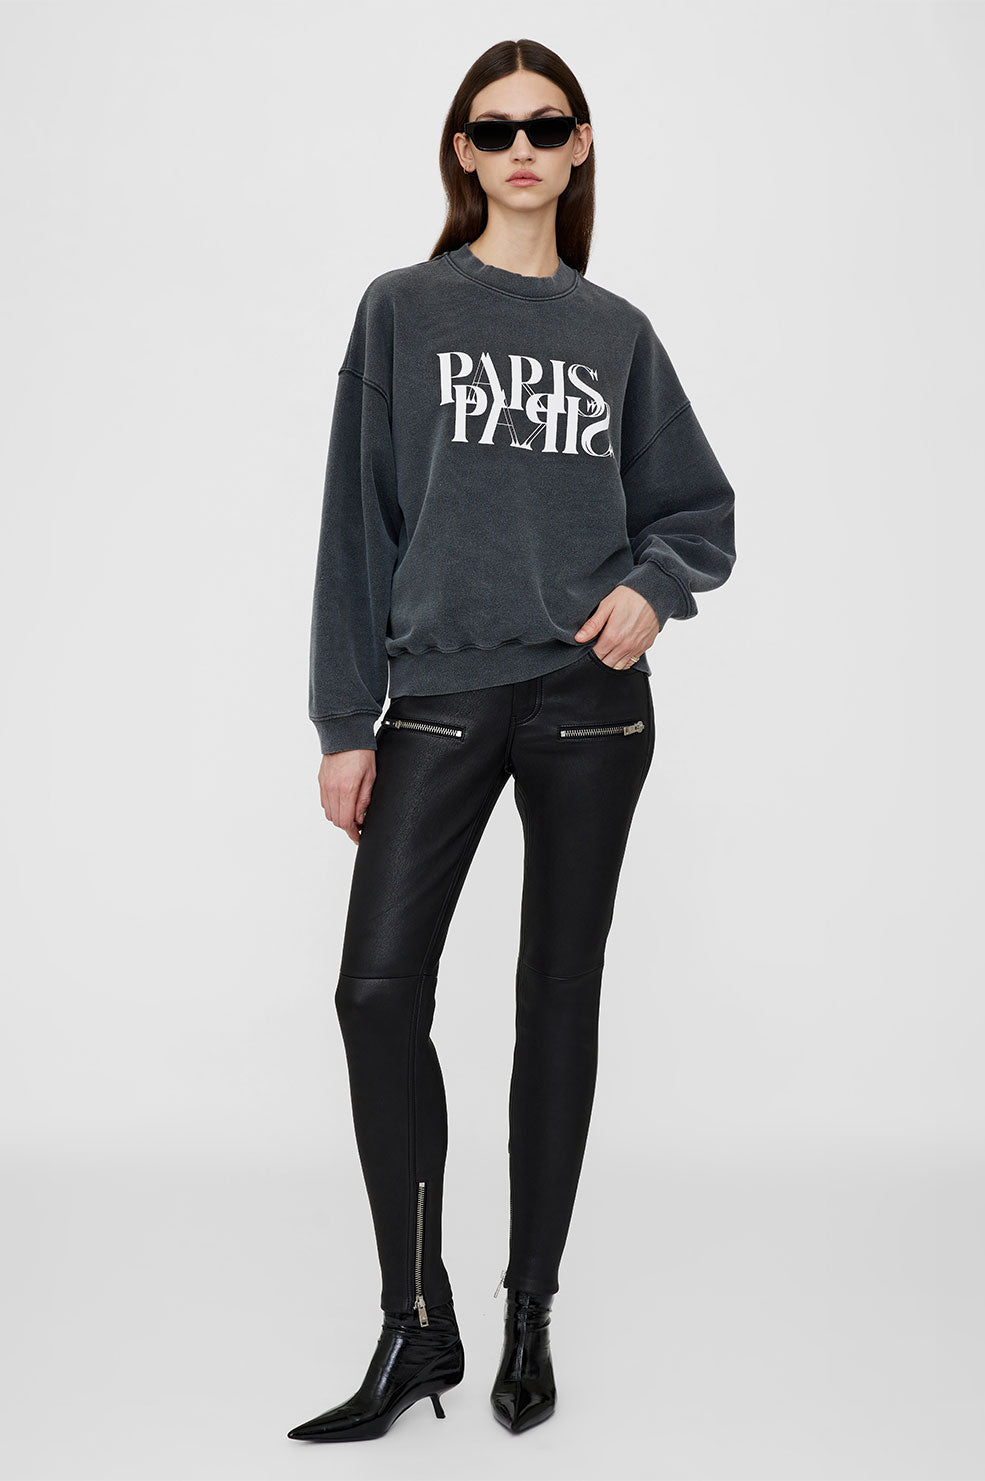 ANINE BING Jaci Sweatshirt Paris - Washed Black - On Model Front